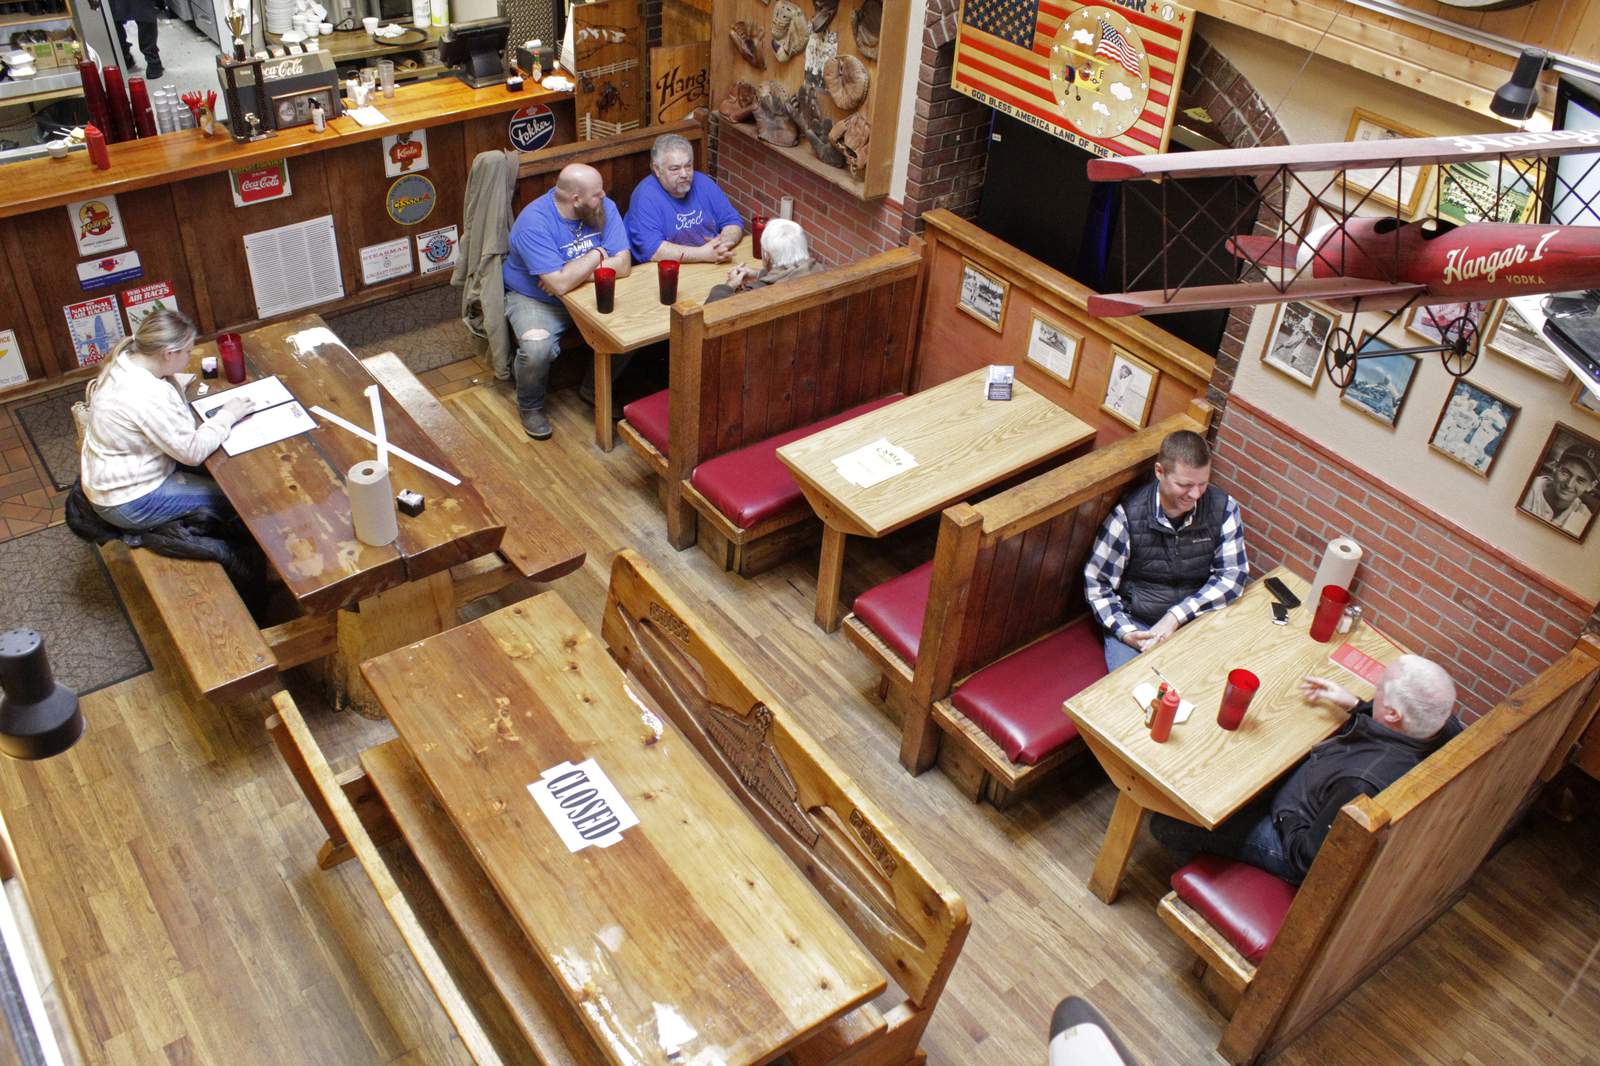 Defiance of virus dining bans grows as restaurants flounder